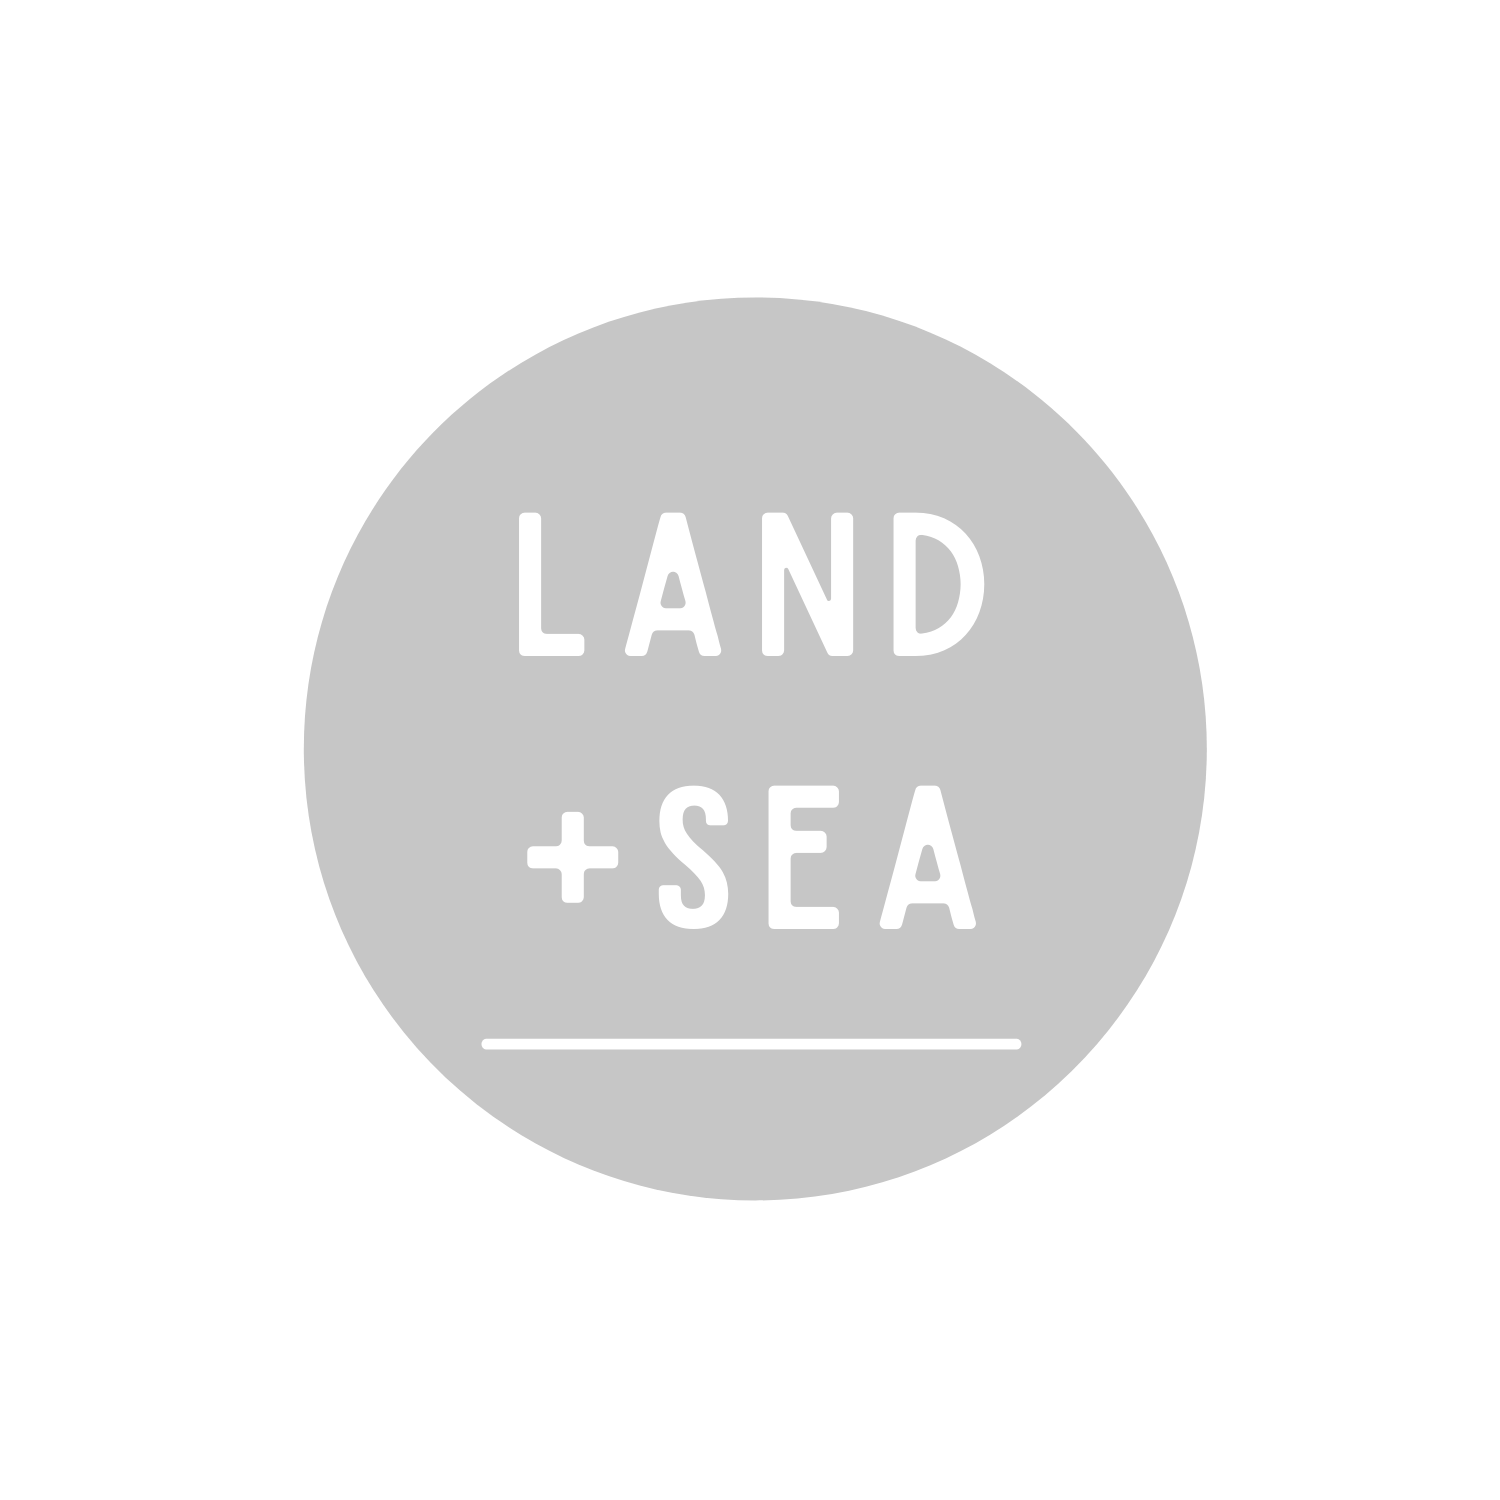 Land + Sea